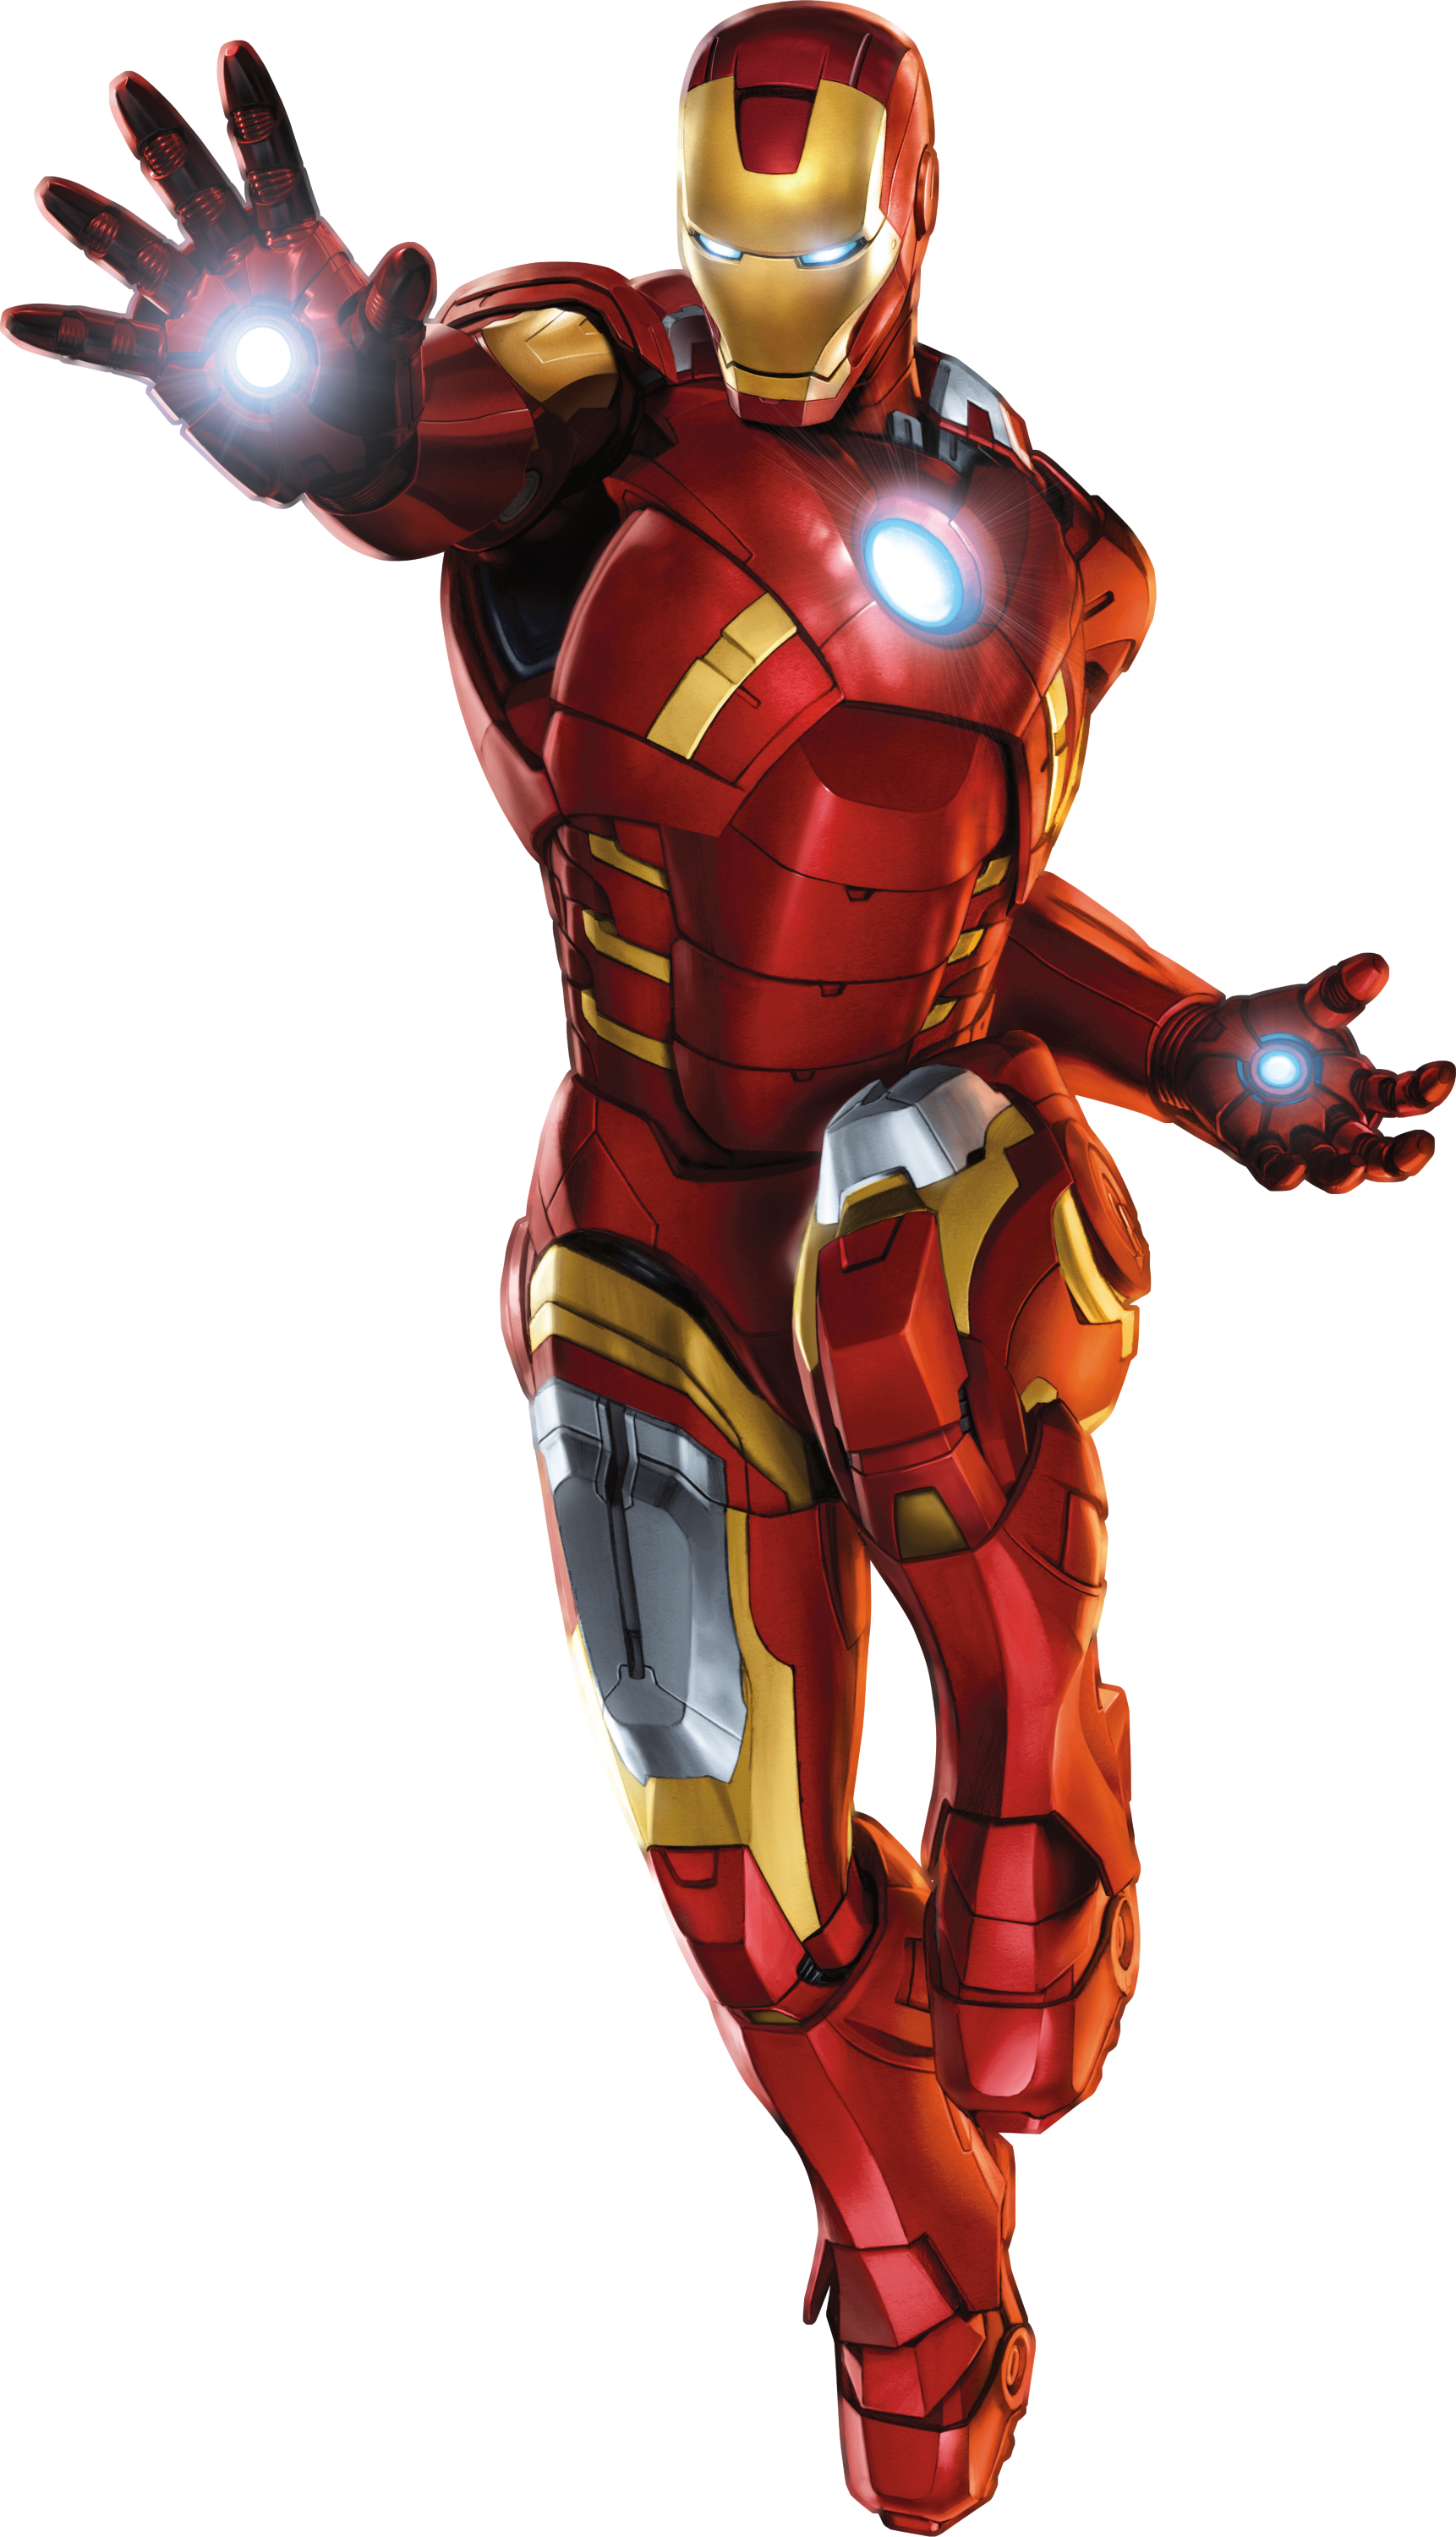 Iron man figurine on a white background free image